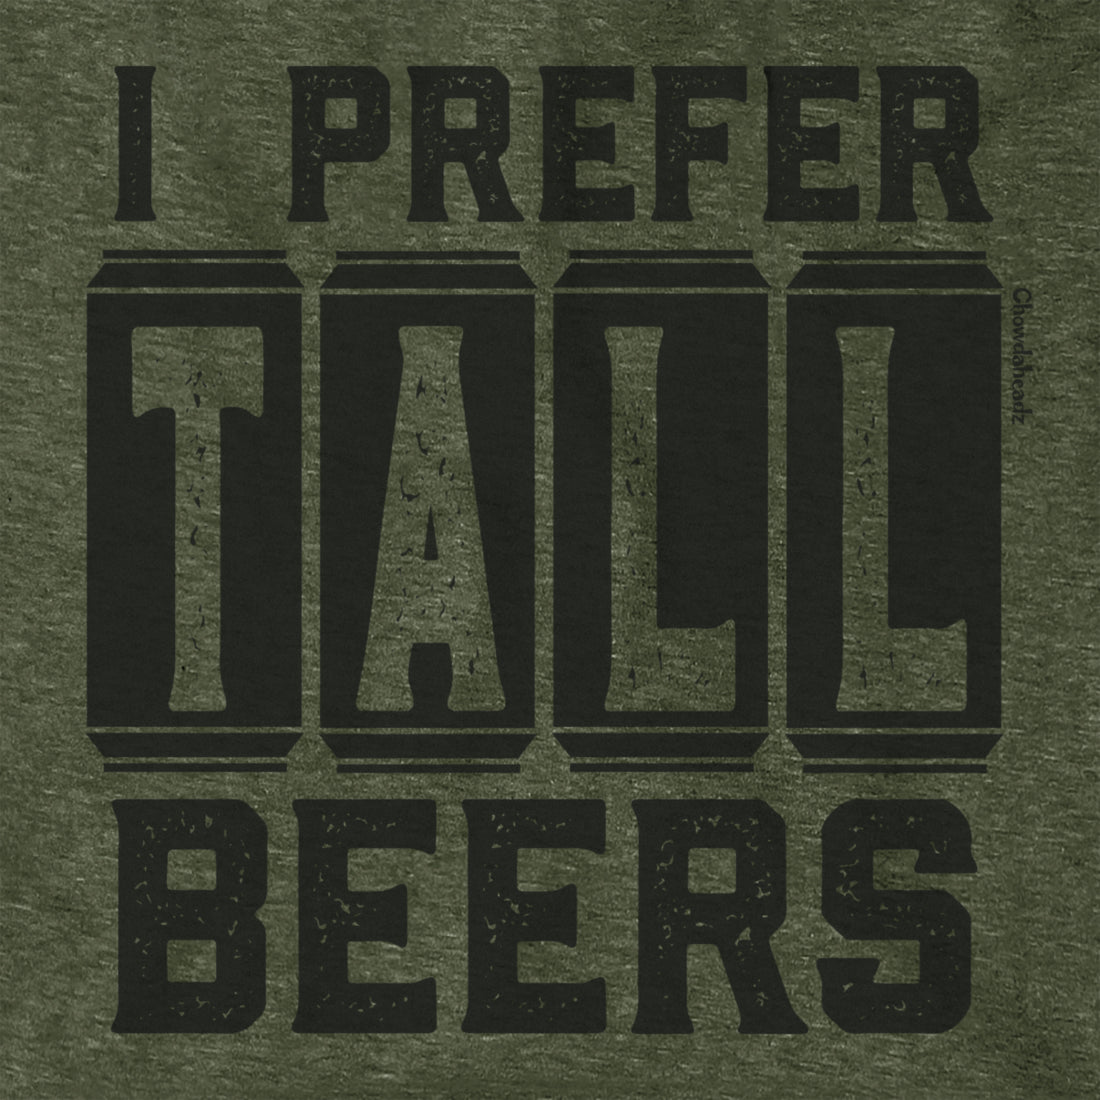 I Prefer Tall Beers Hoodie - Chowdaheadz